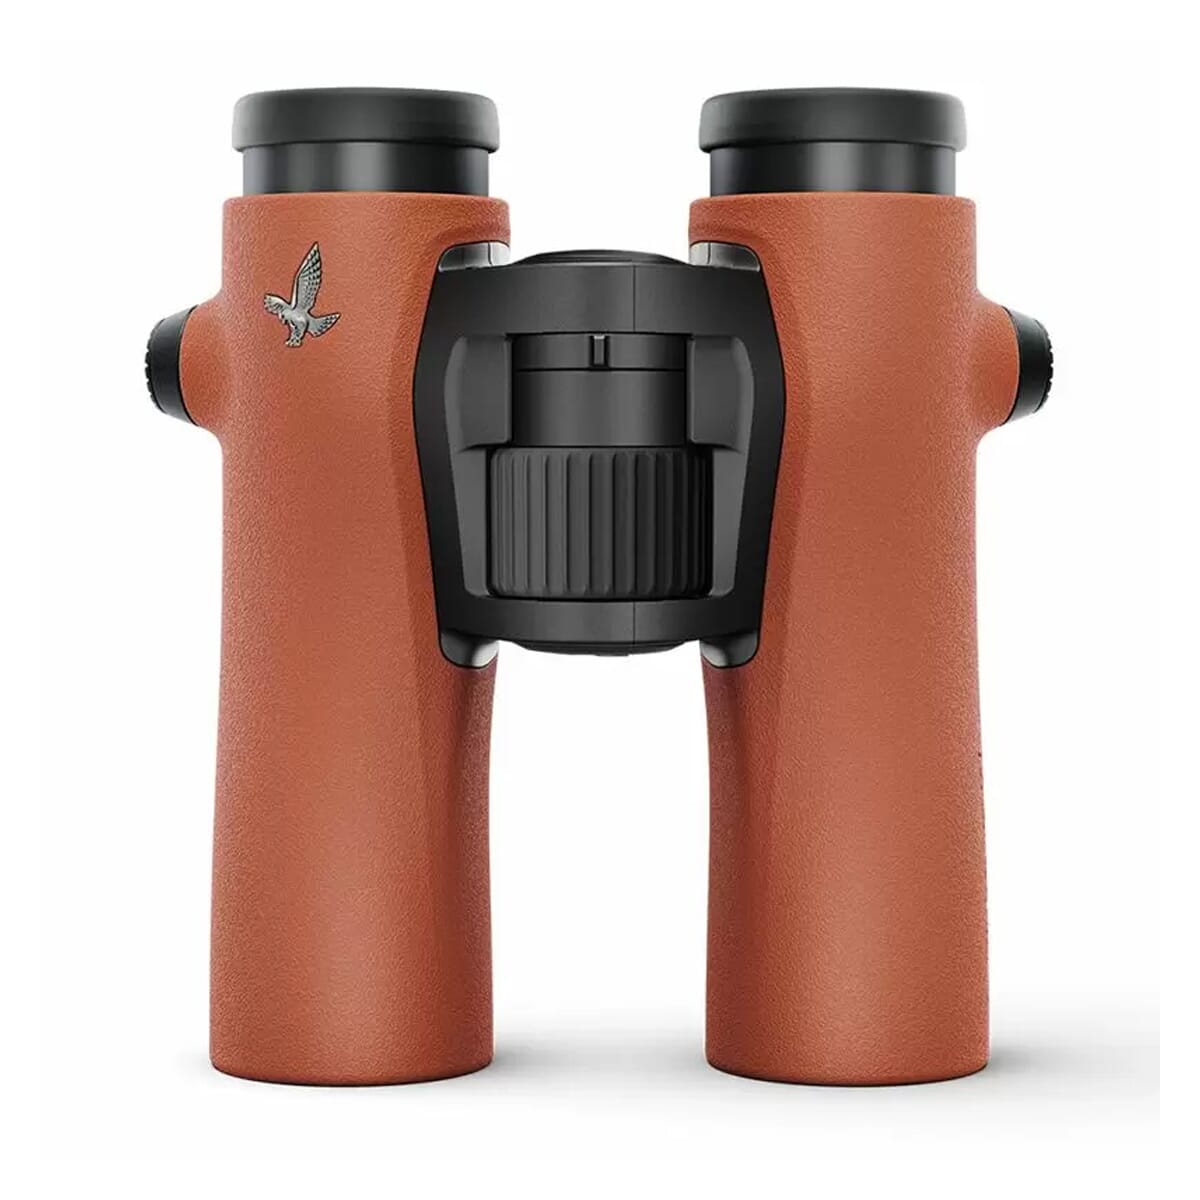 Swarovski NL Pure 10x32 Burnt Orange Binoculars w/Sidebag, Strap, Eyepiece, Lens Cover, and Cleaning Kit 36243